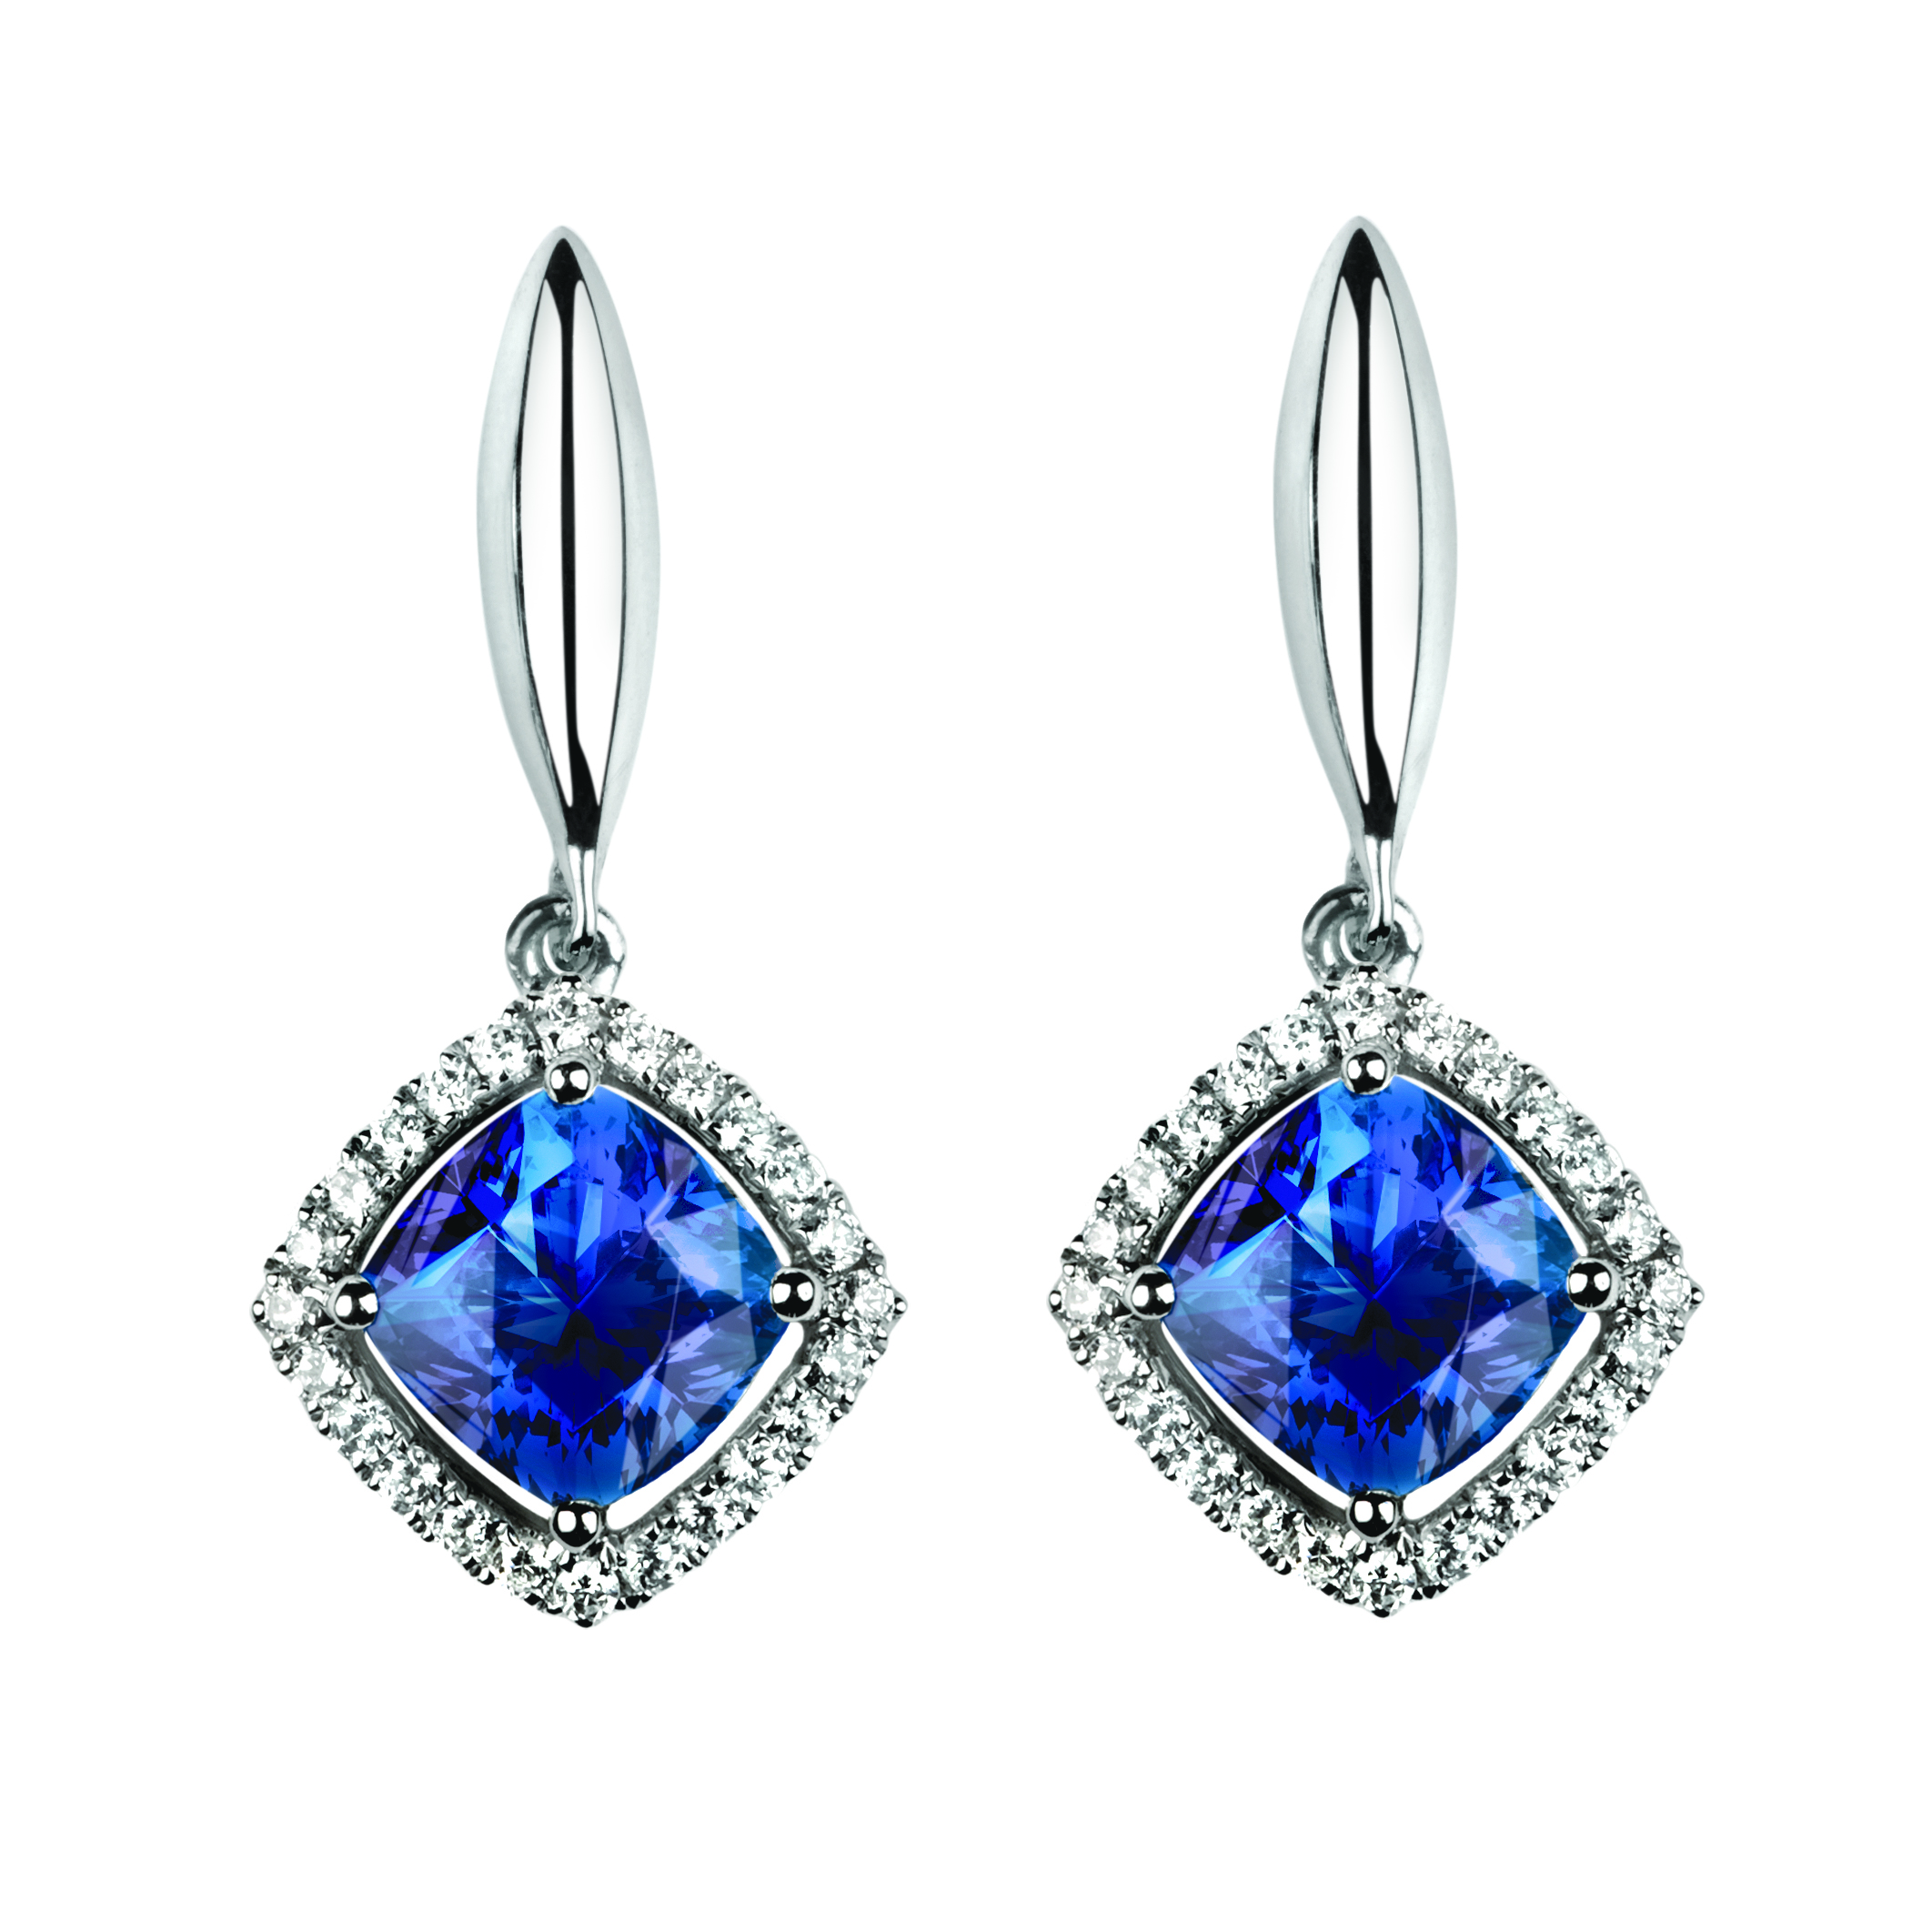 The Grace and Elegance of blue earrings - StyleSkier.com